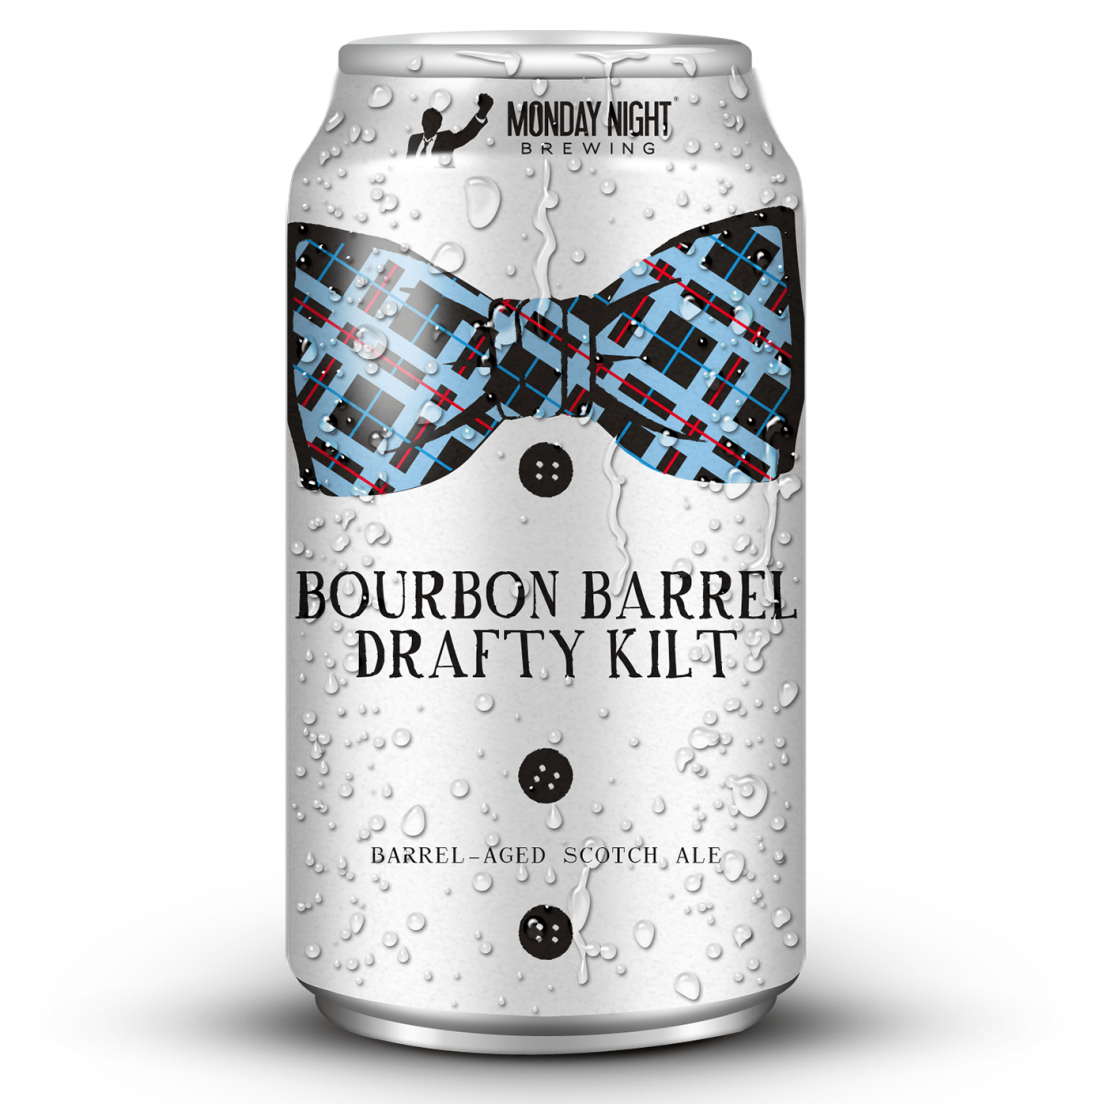 Monday Night Bourbon Barrel Drafty Kilt can